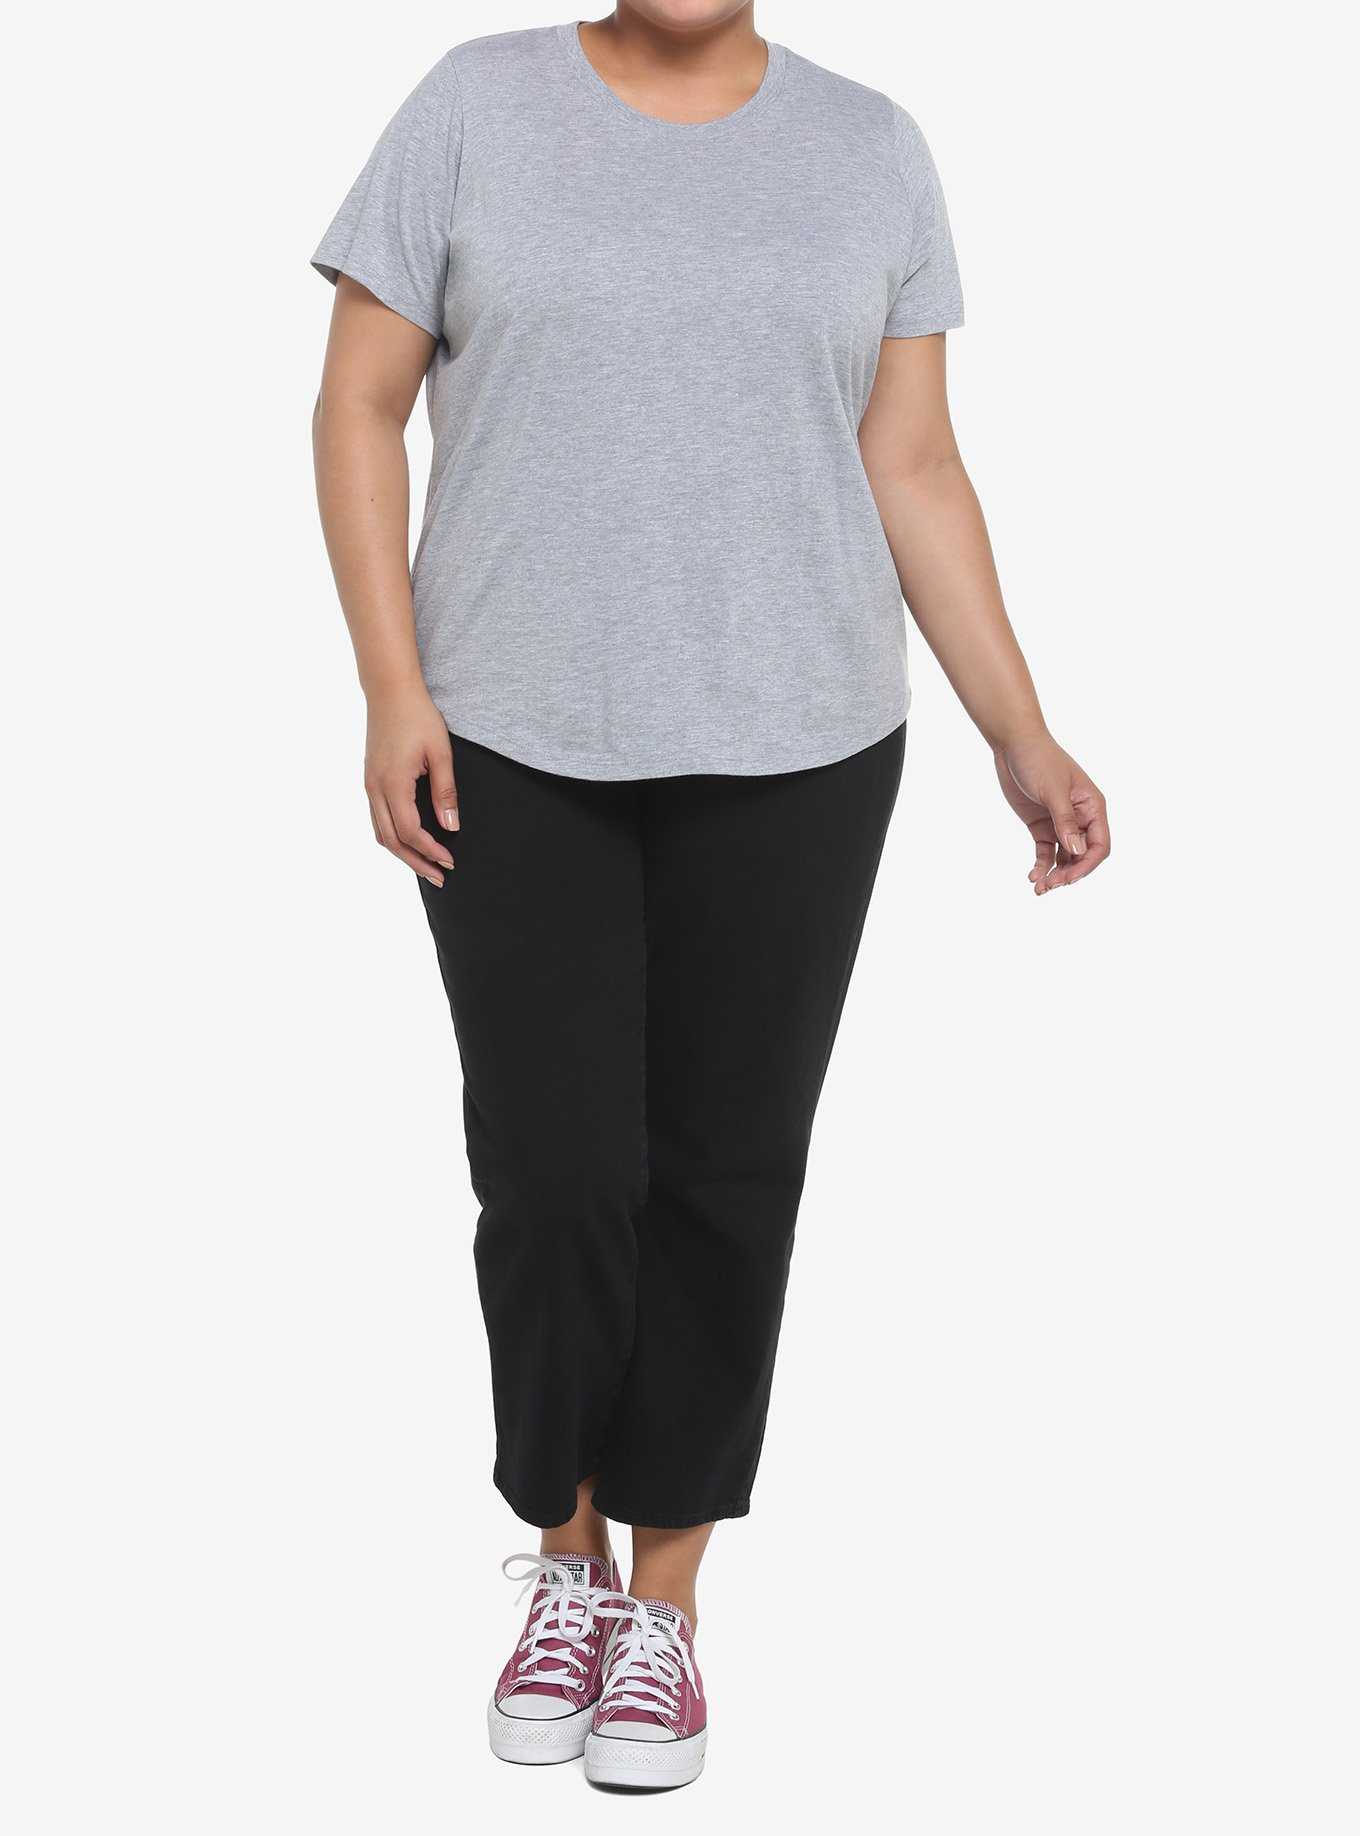 Her Universe Heather Grey Crewneck Favorite T-Shirt Plus Size, , hi-res